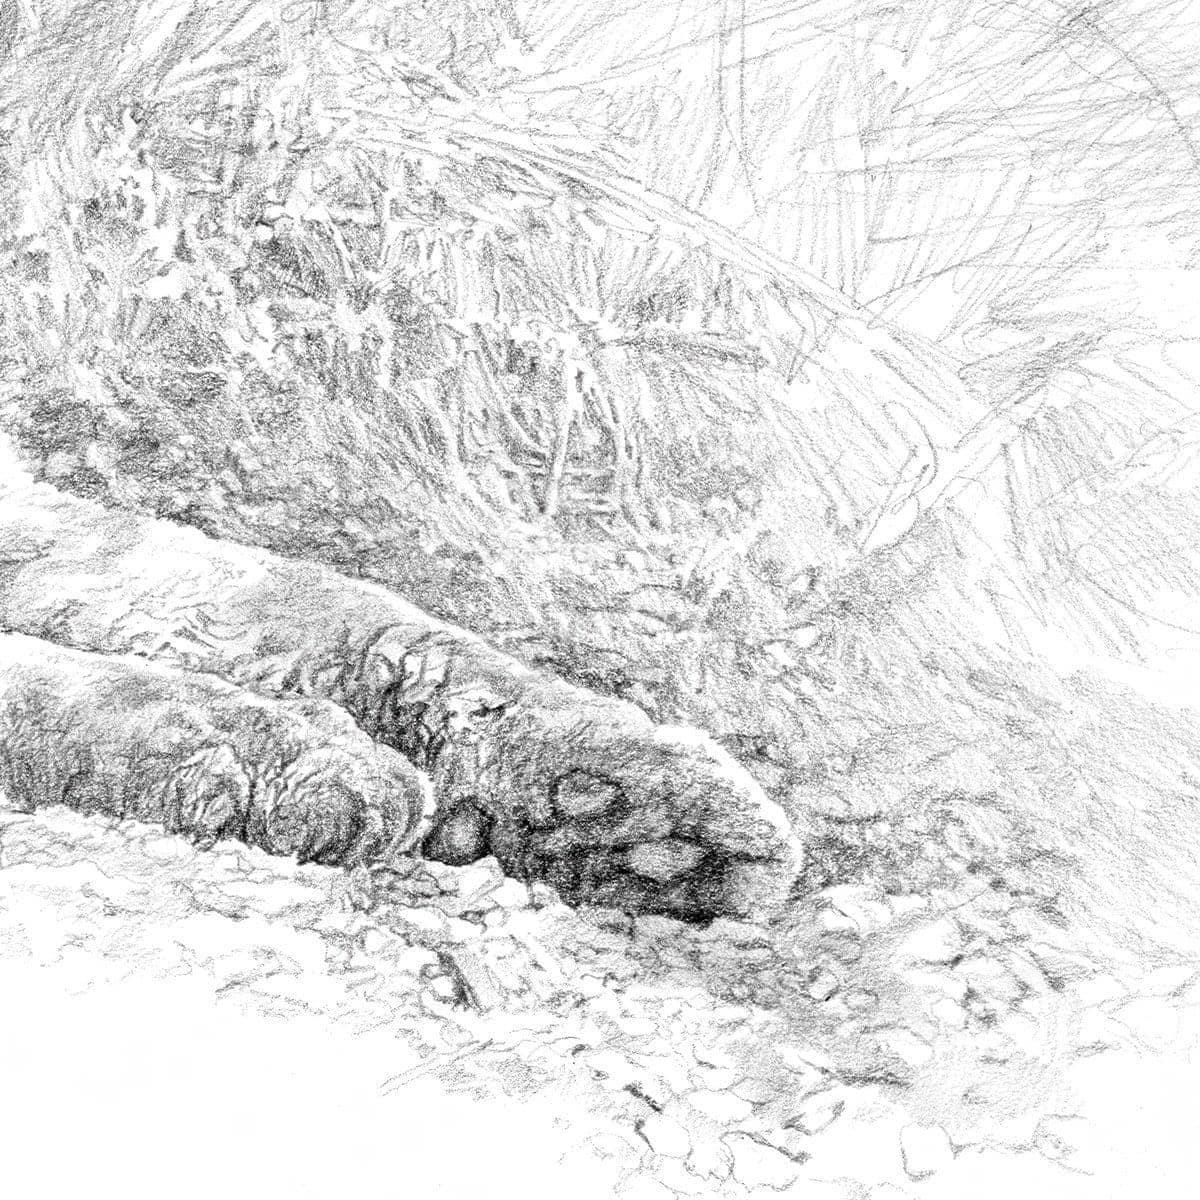 Cougar Basking - Framed Print | Artwork by Glen Loates